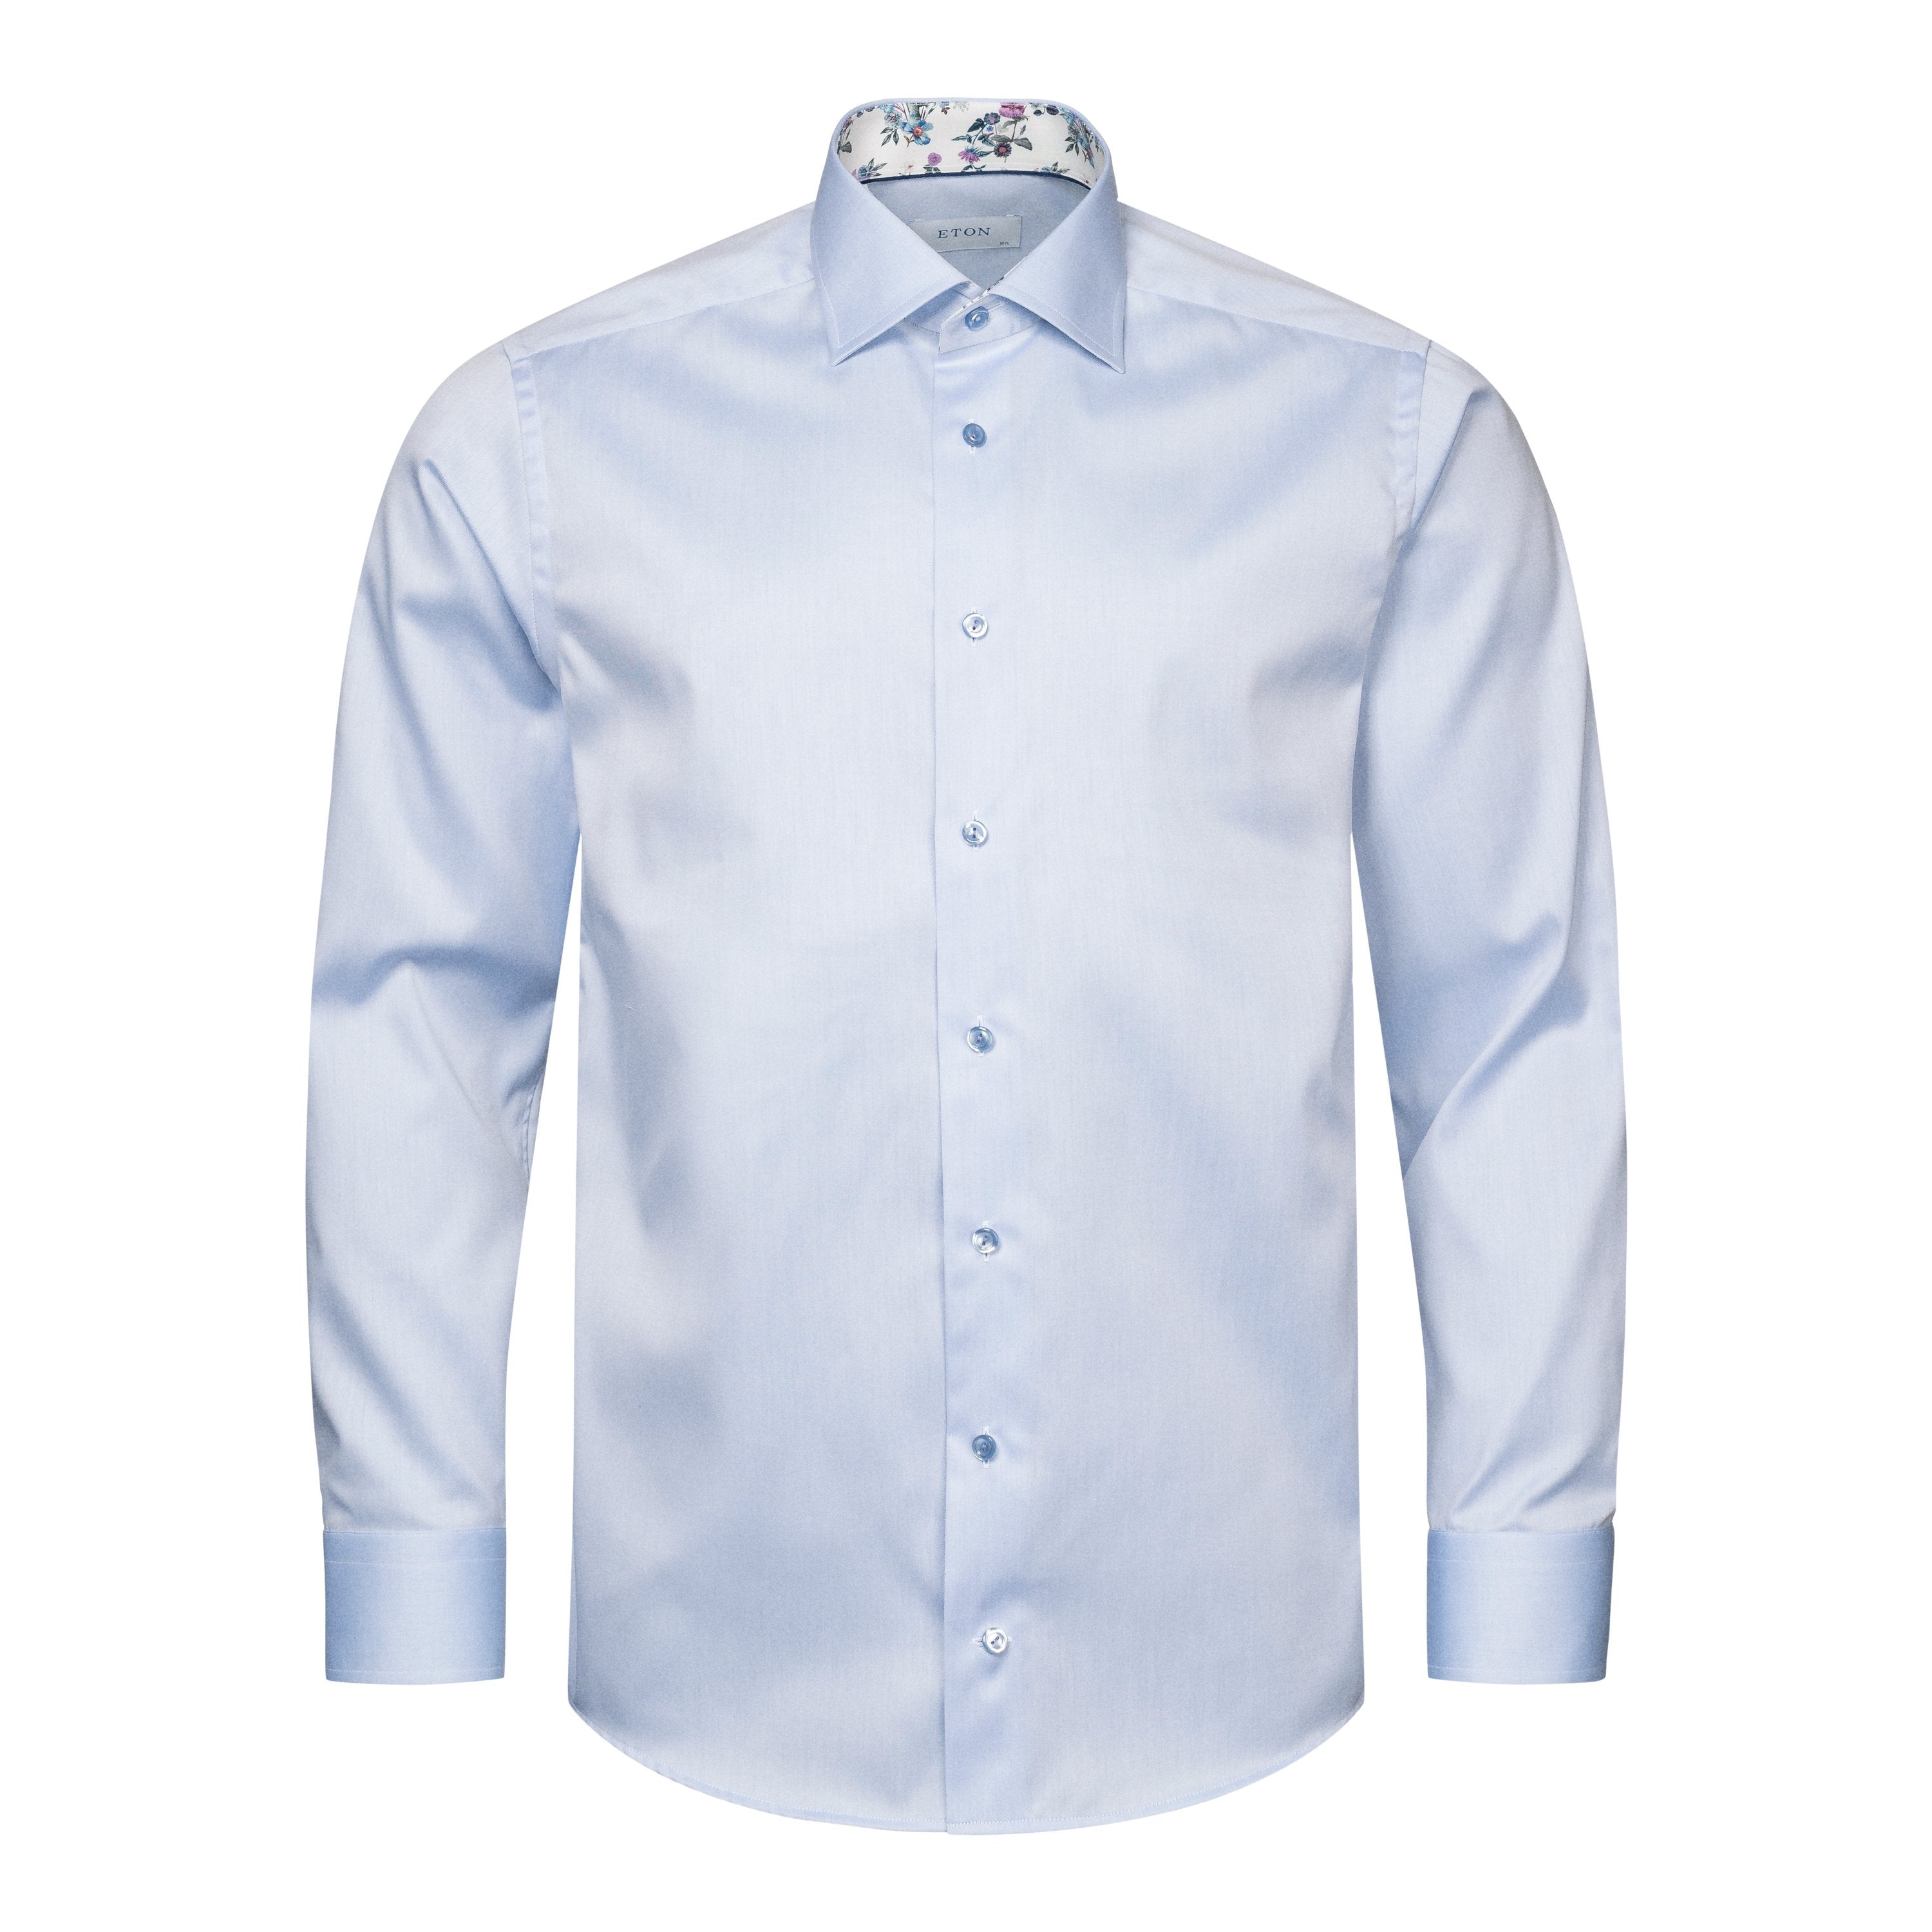 ETON - Sky Blue CONTEMPORARY FIT Signature Twill Shirt - Floral Contrast Details 10001168321